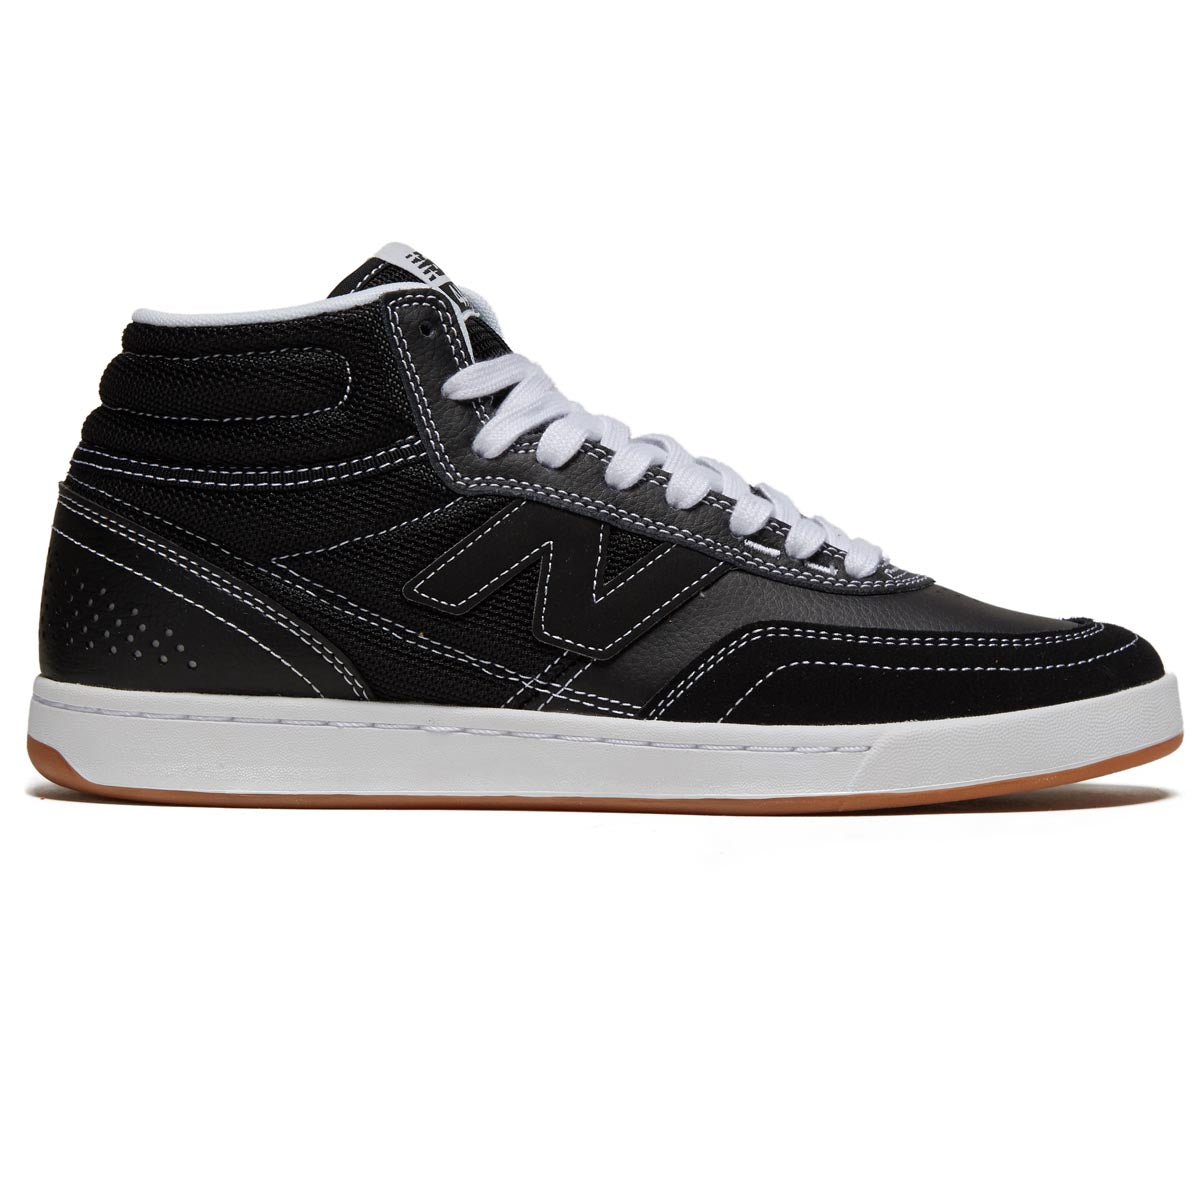 New Balance 440 High V2 Shoes - Black image 1